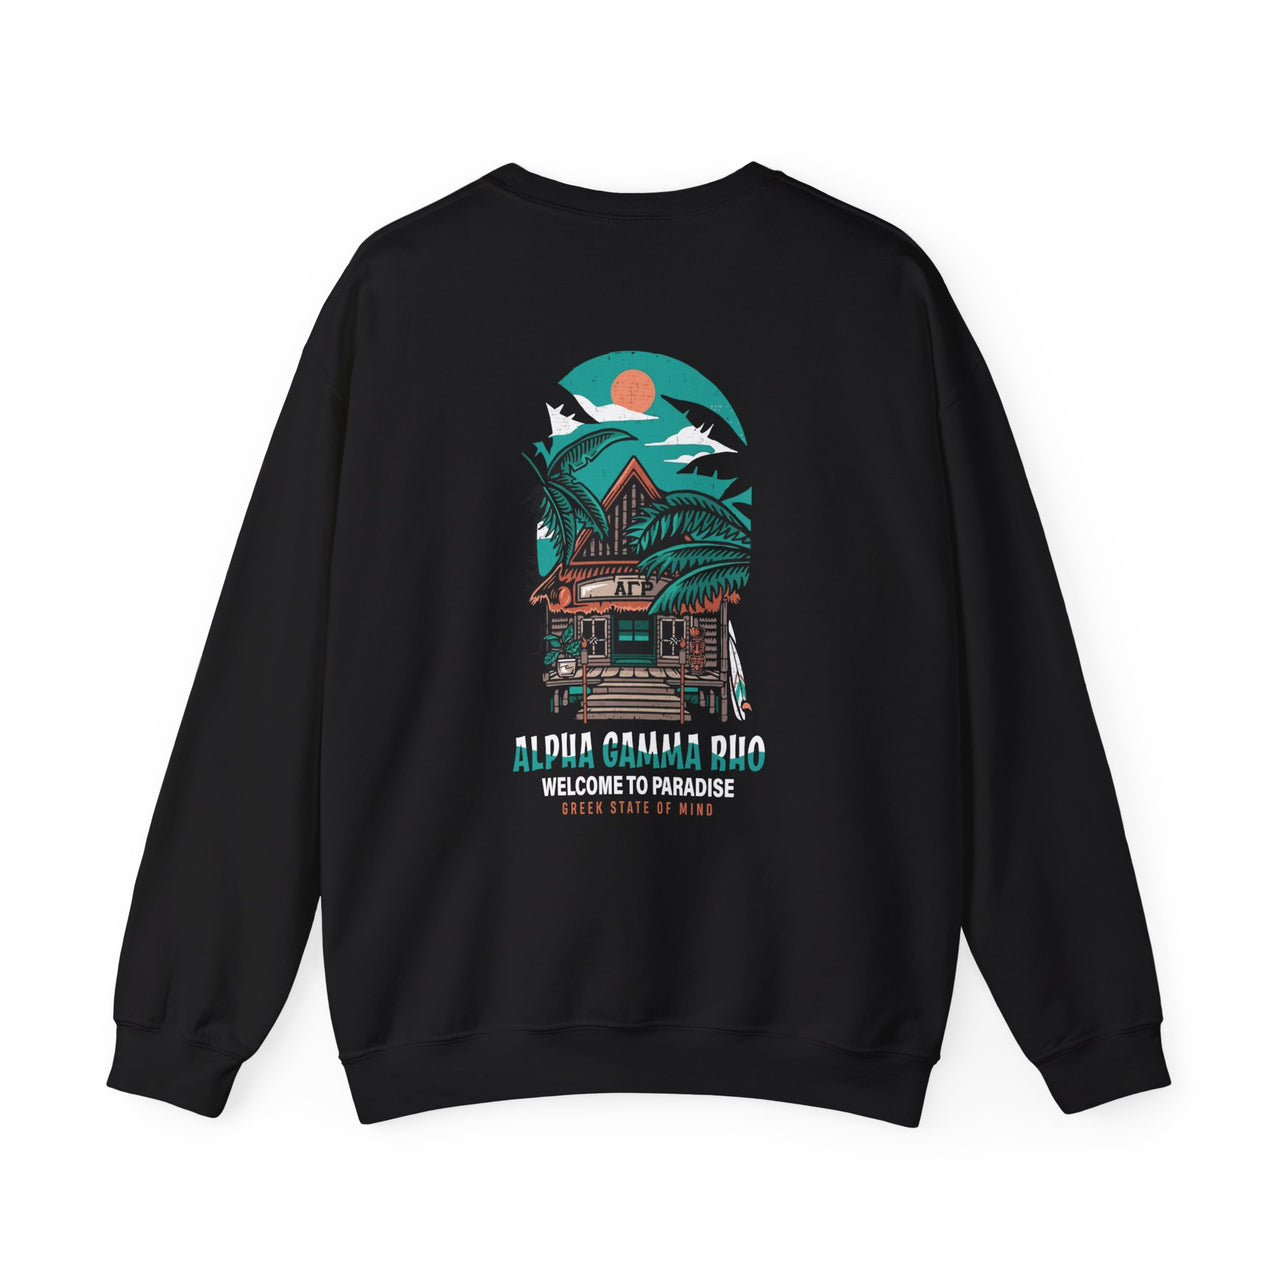 Alpha Gamma Rho Graphic Crewneck Sweatshirt | Welcome to Paradise